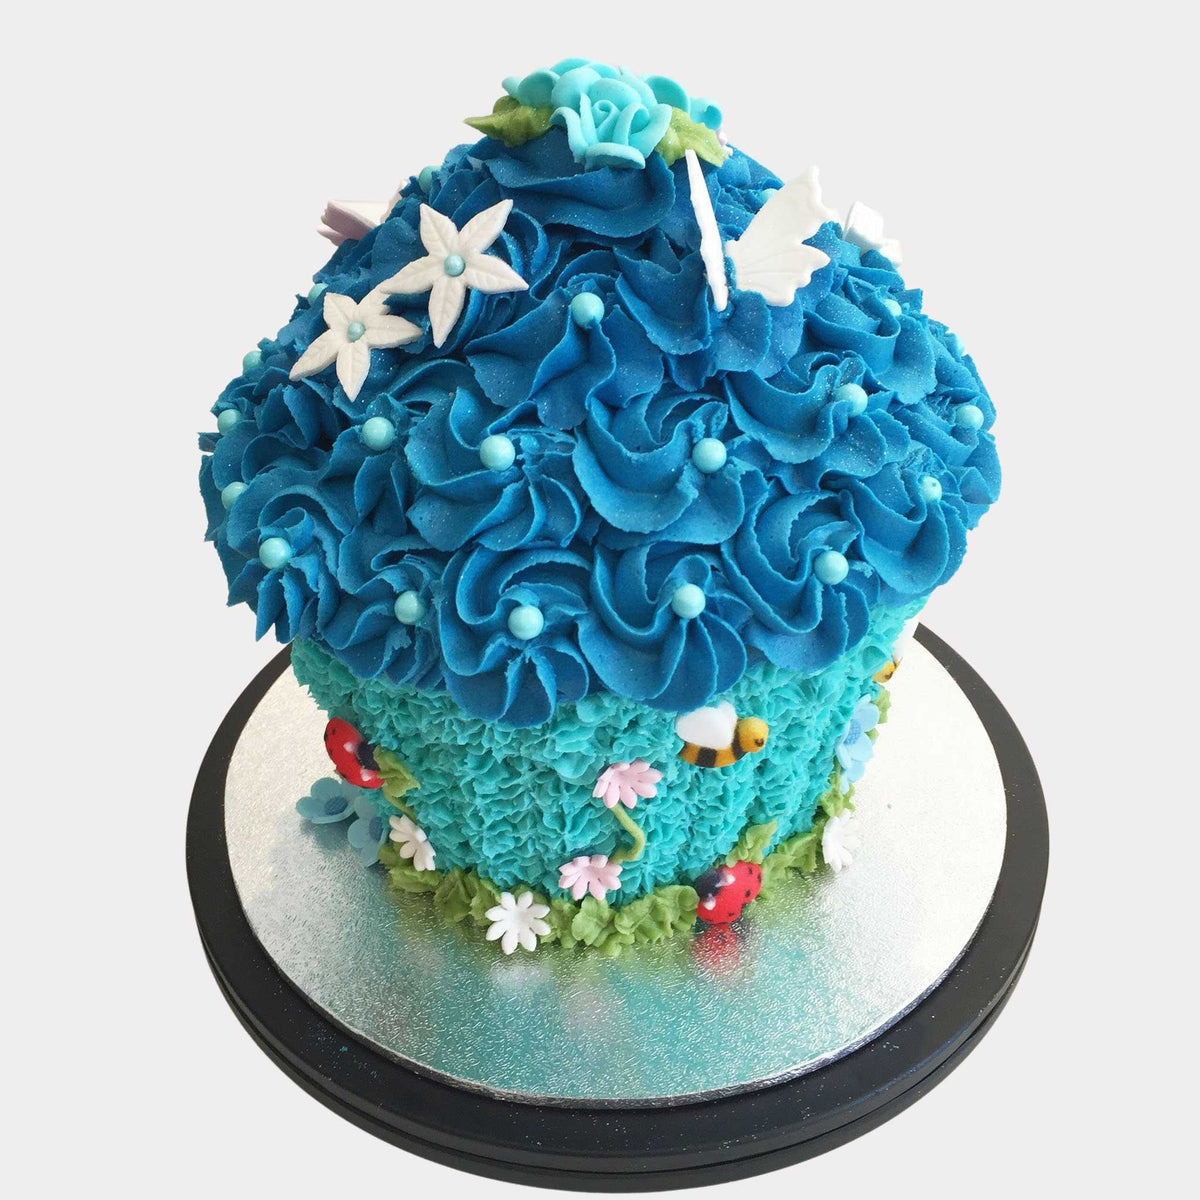 Giant cupcake cake - FunCakes